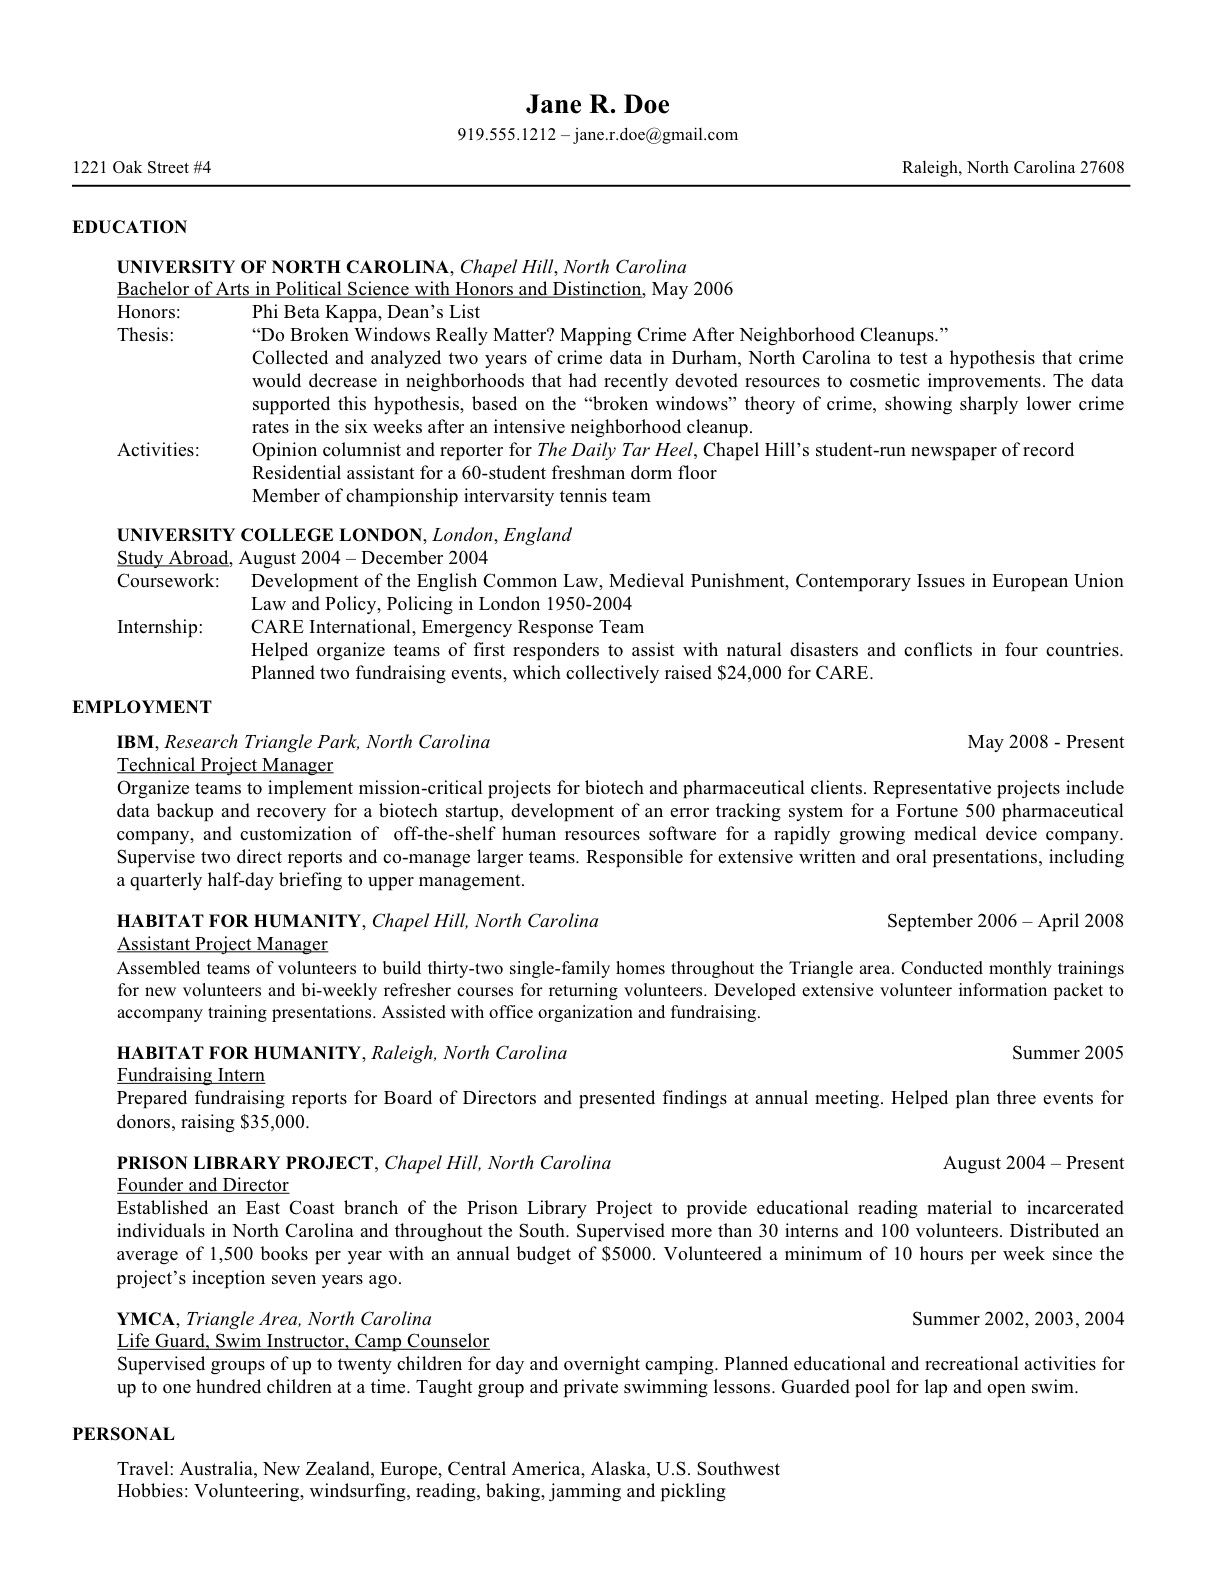 Sample resume to print